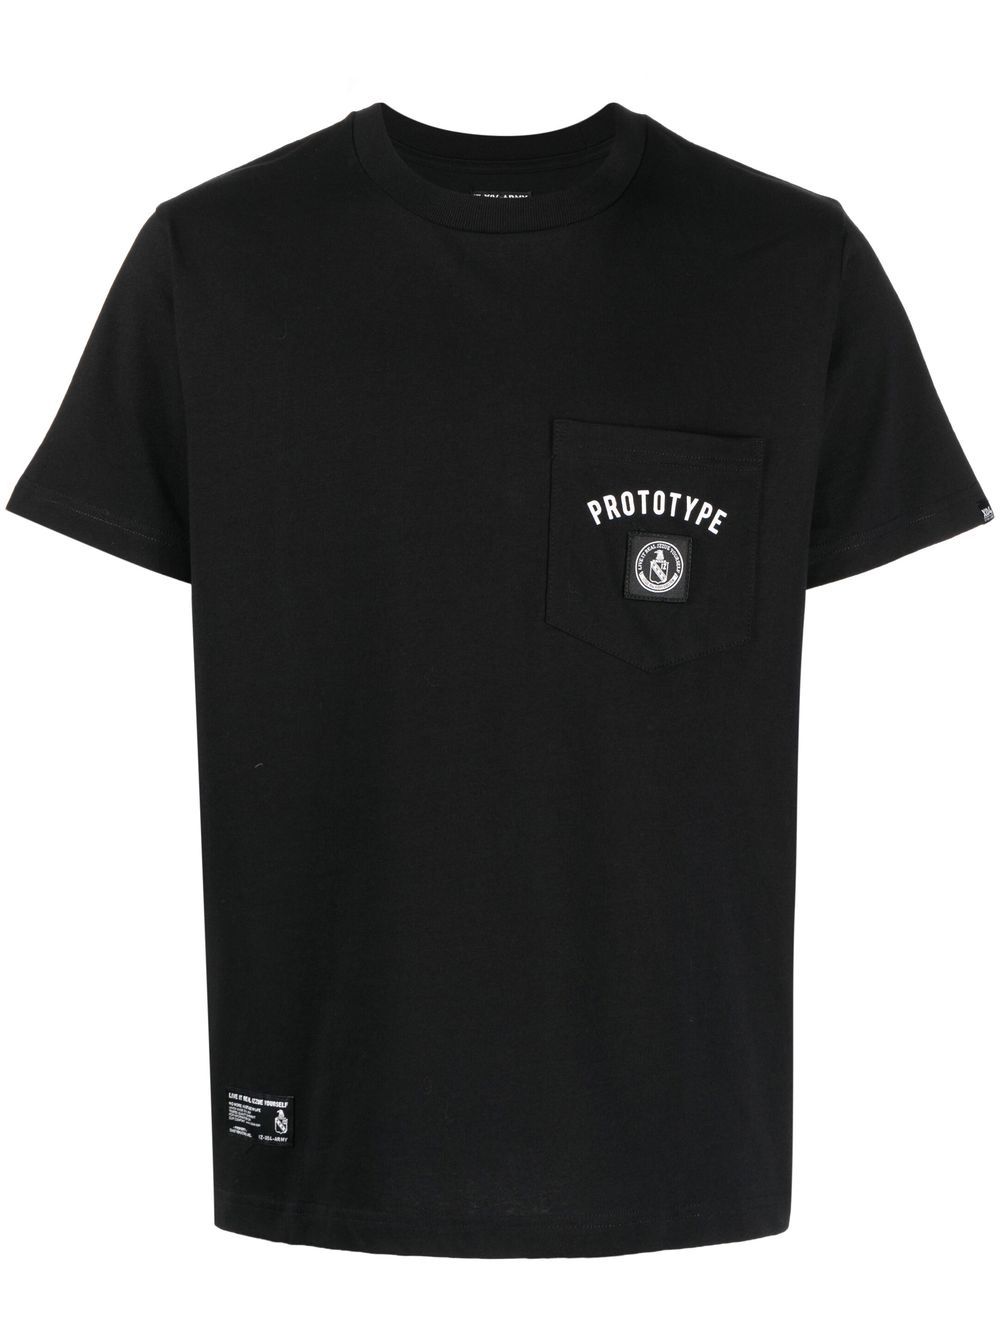 izzue 'Prototype' short-sleeve T-shirt - Black von izzue